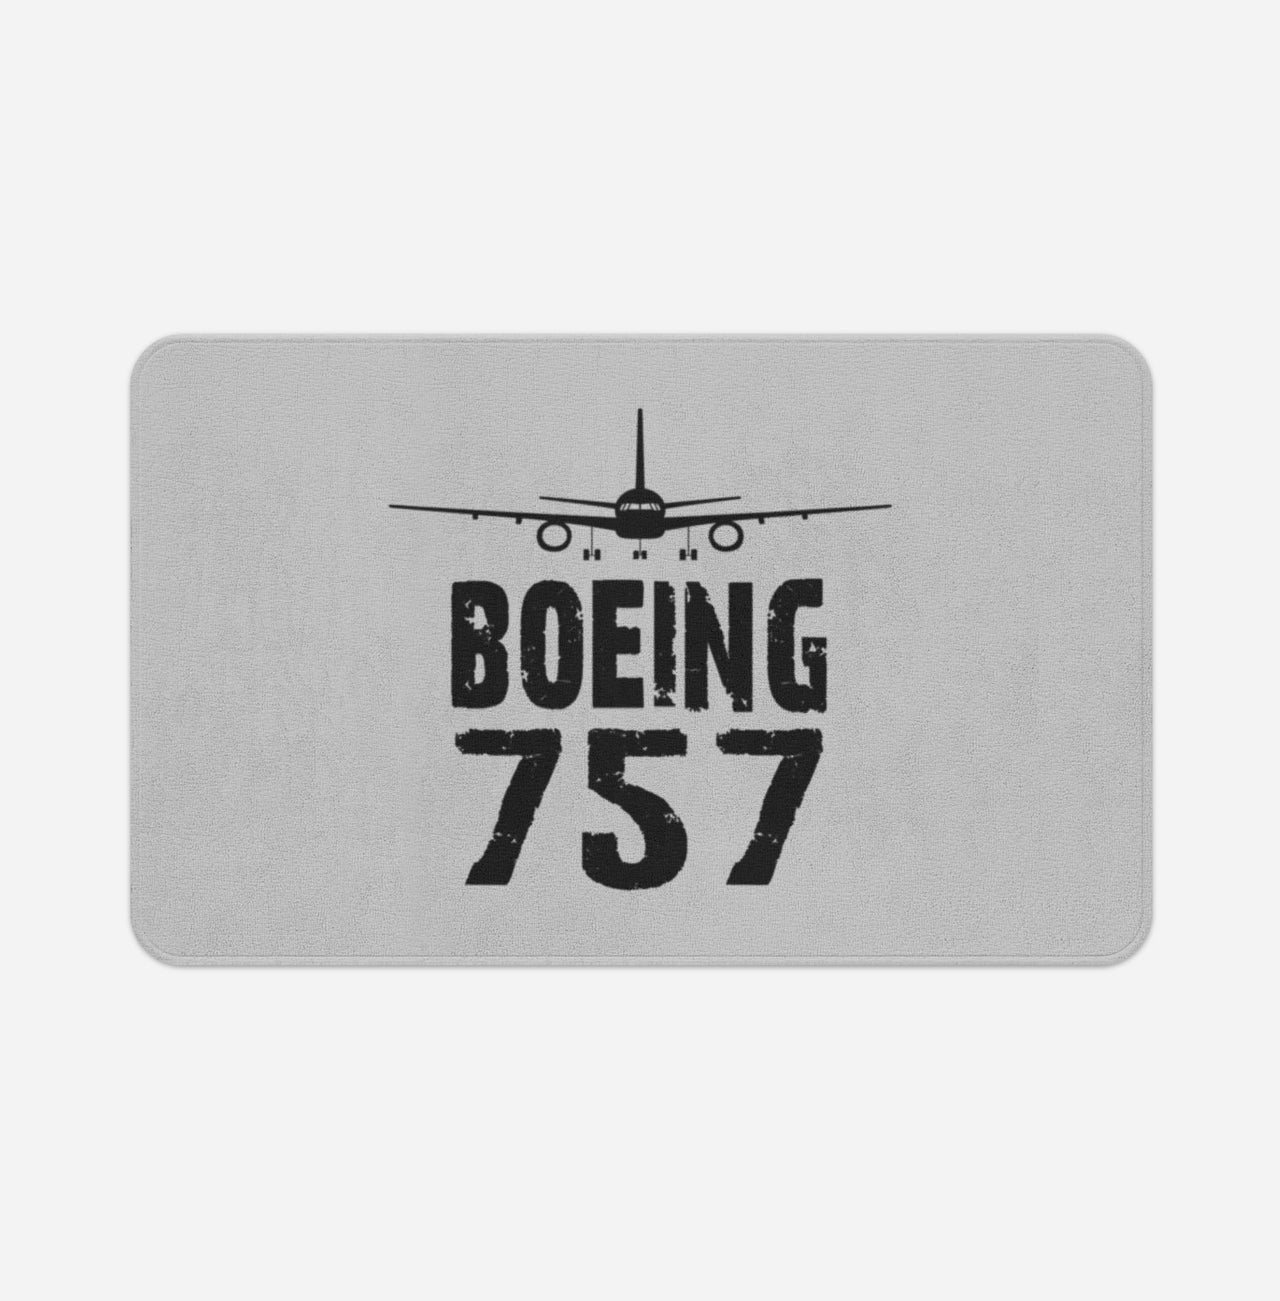 Boeing 757 & Plane Designed Bath Mats